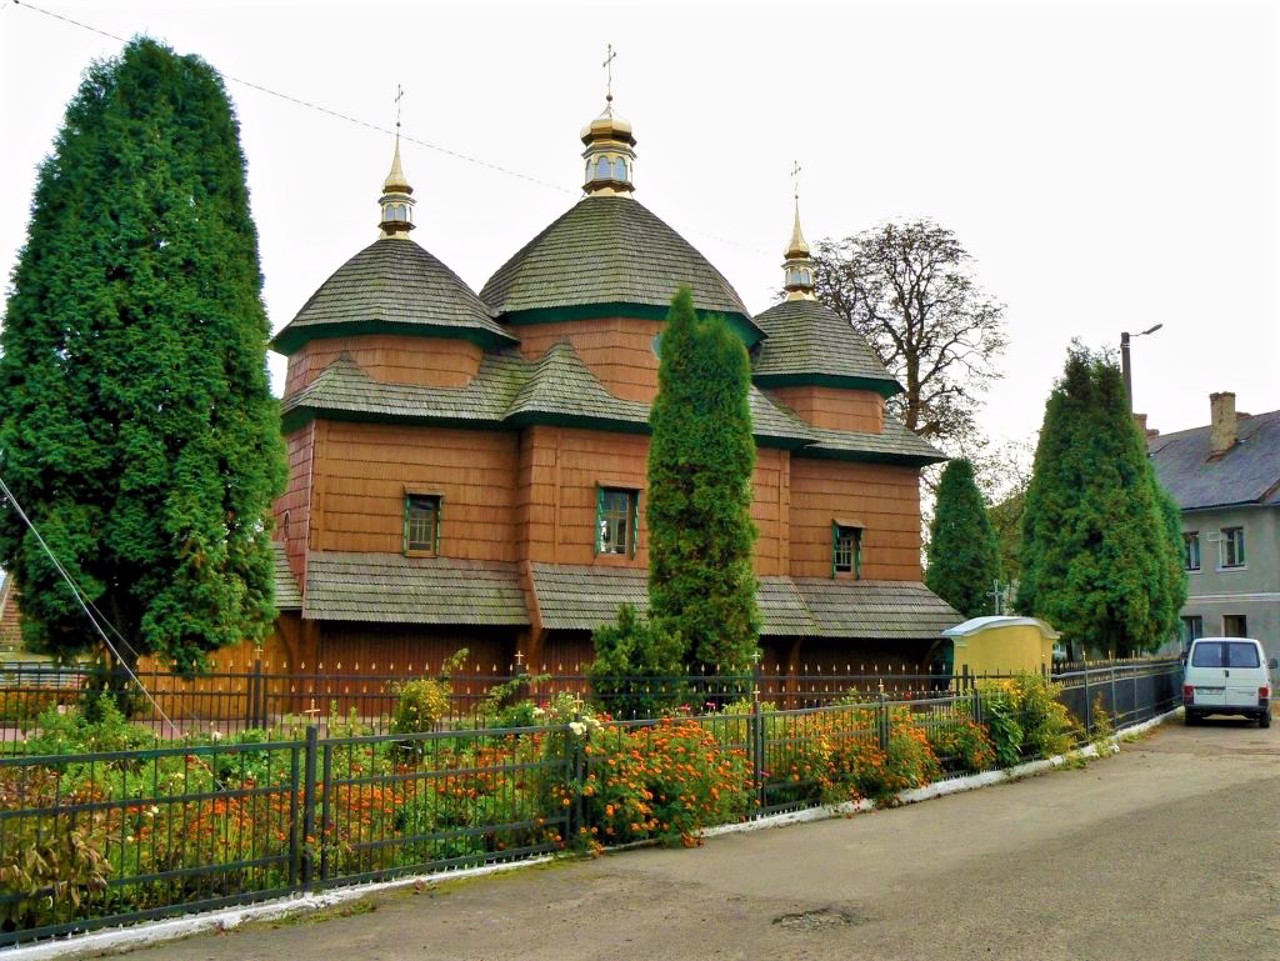 Horodok city, Lviv region